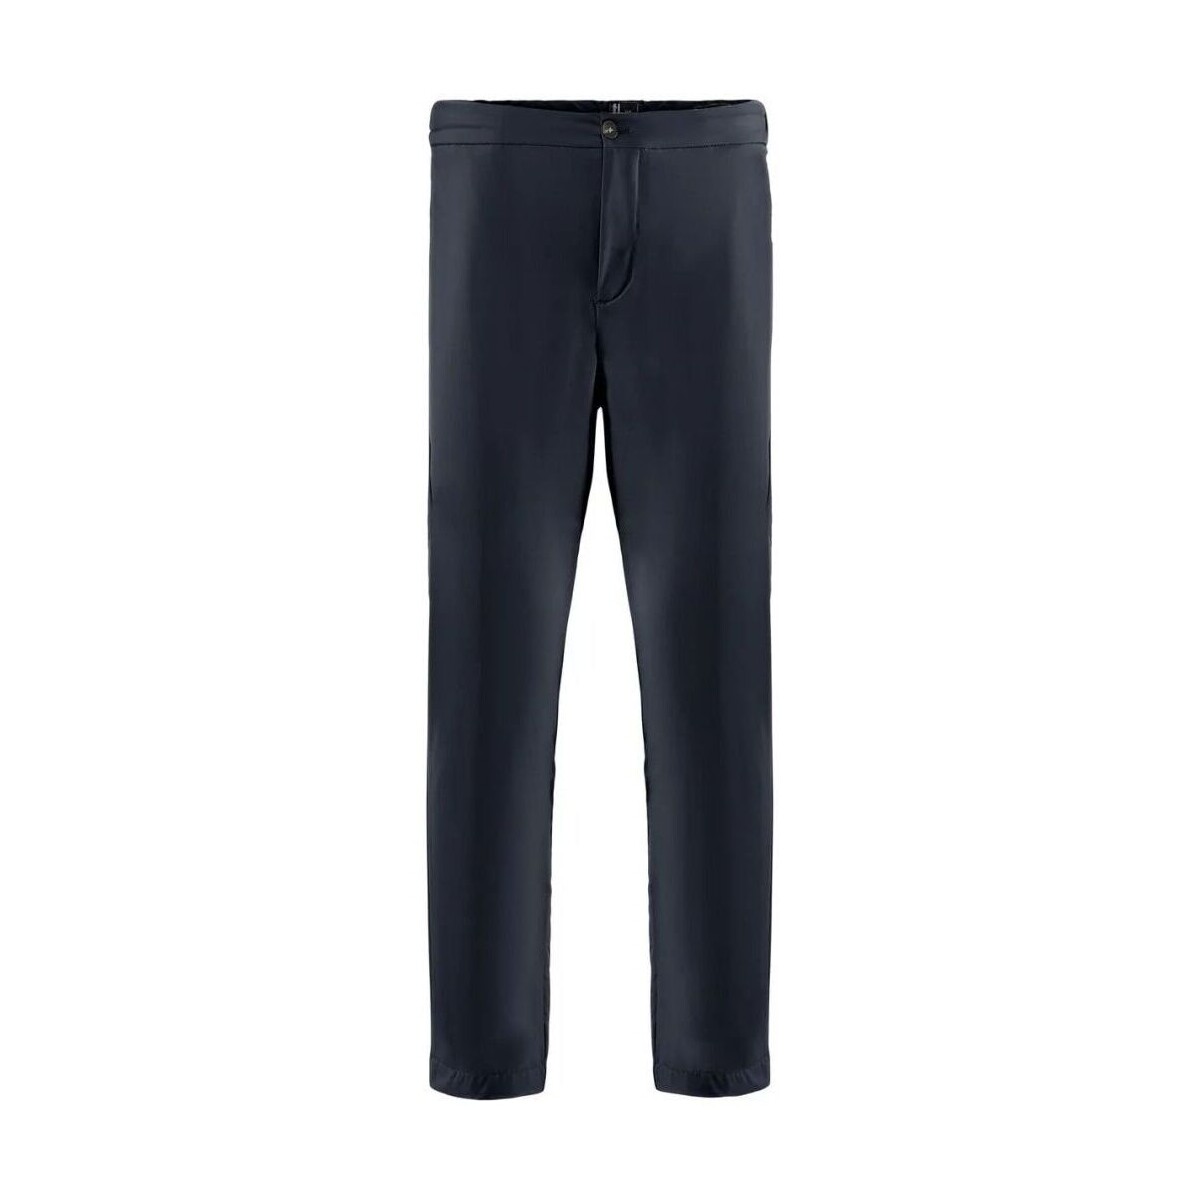 Abbigliamento Uomo Pantaloni Bomboogie PMTYED TTCR4-20 NAVY BLUE Blu